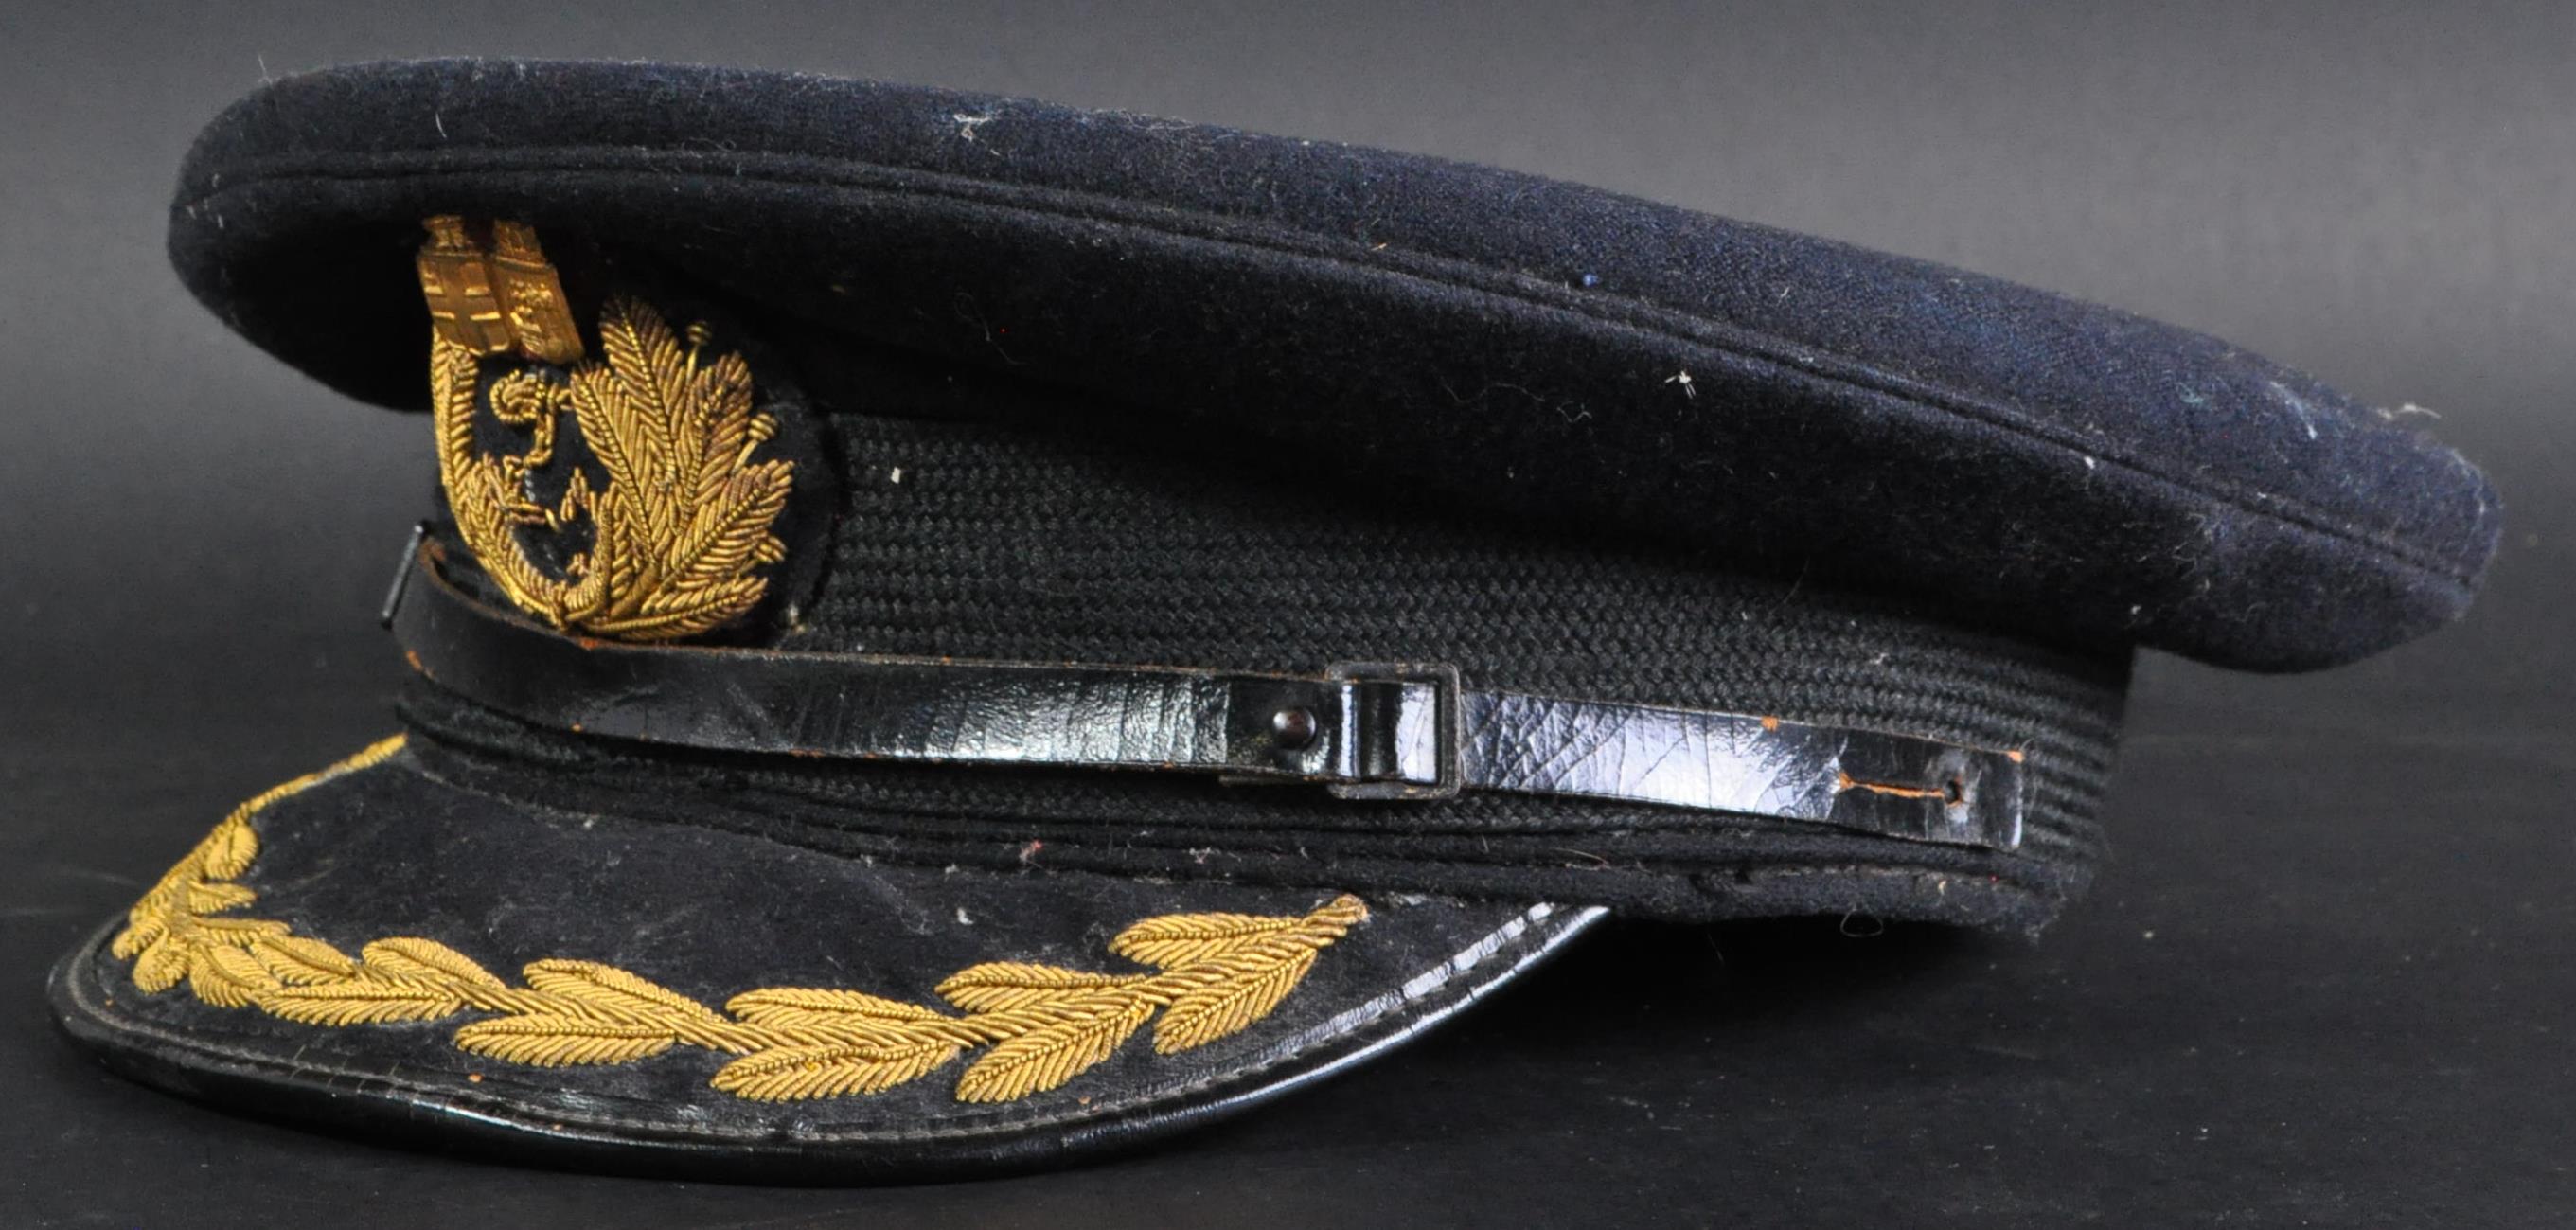 WWII INTEREST - 20TH CENTURY BRITISH ROYAL NAVY OFFICER'S CAP